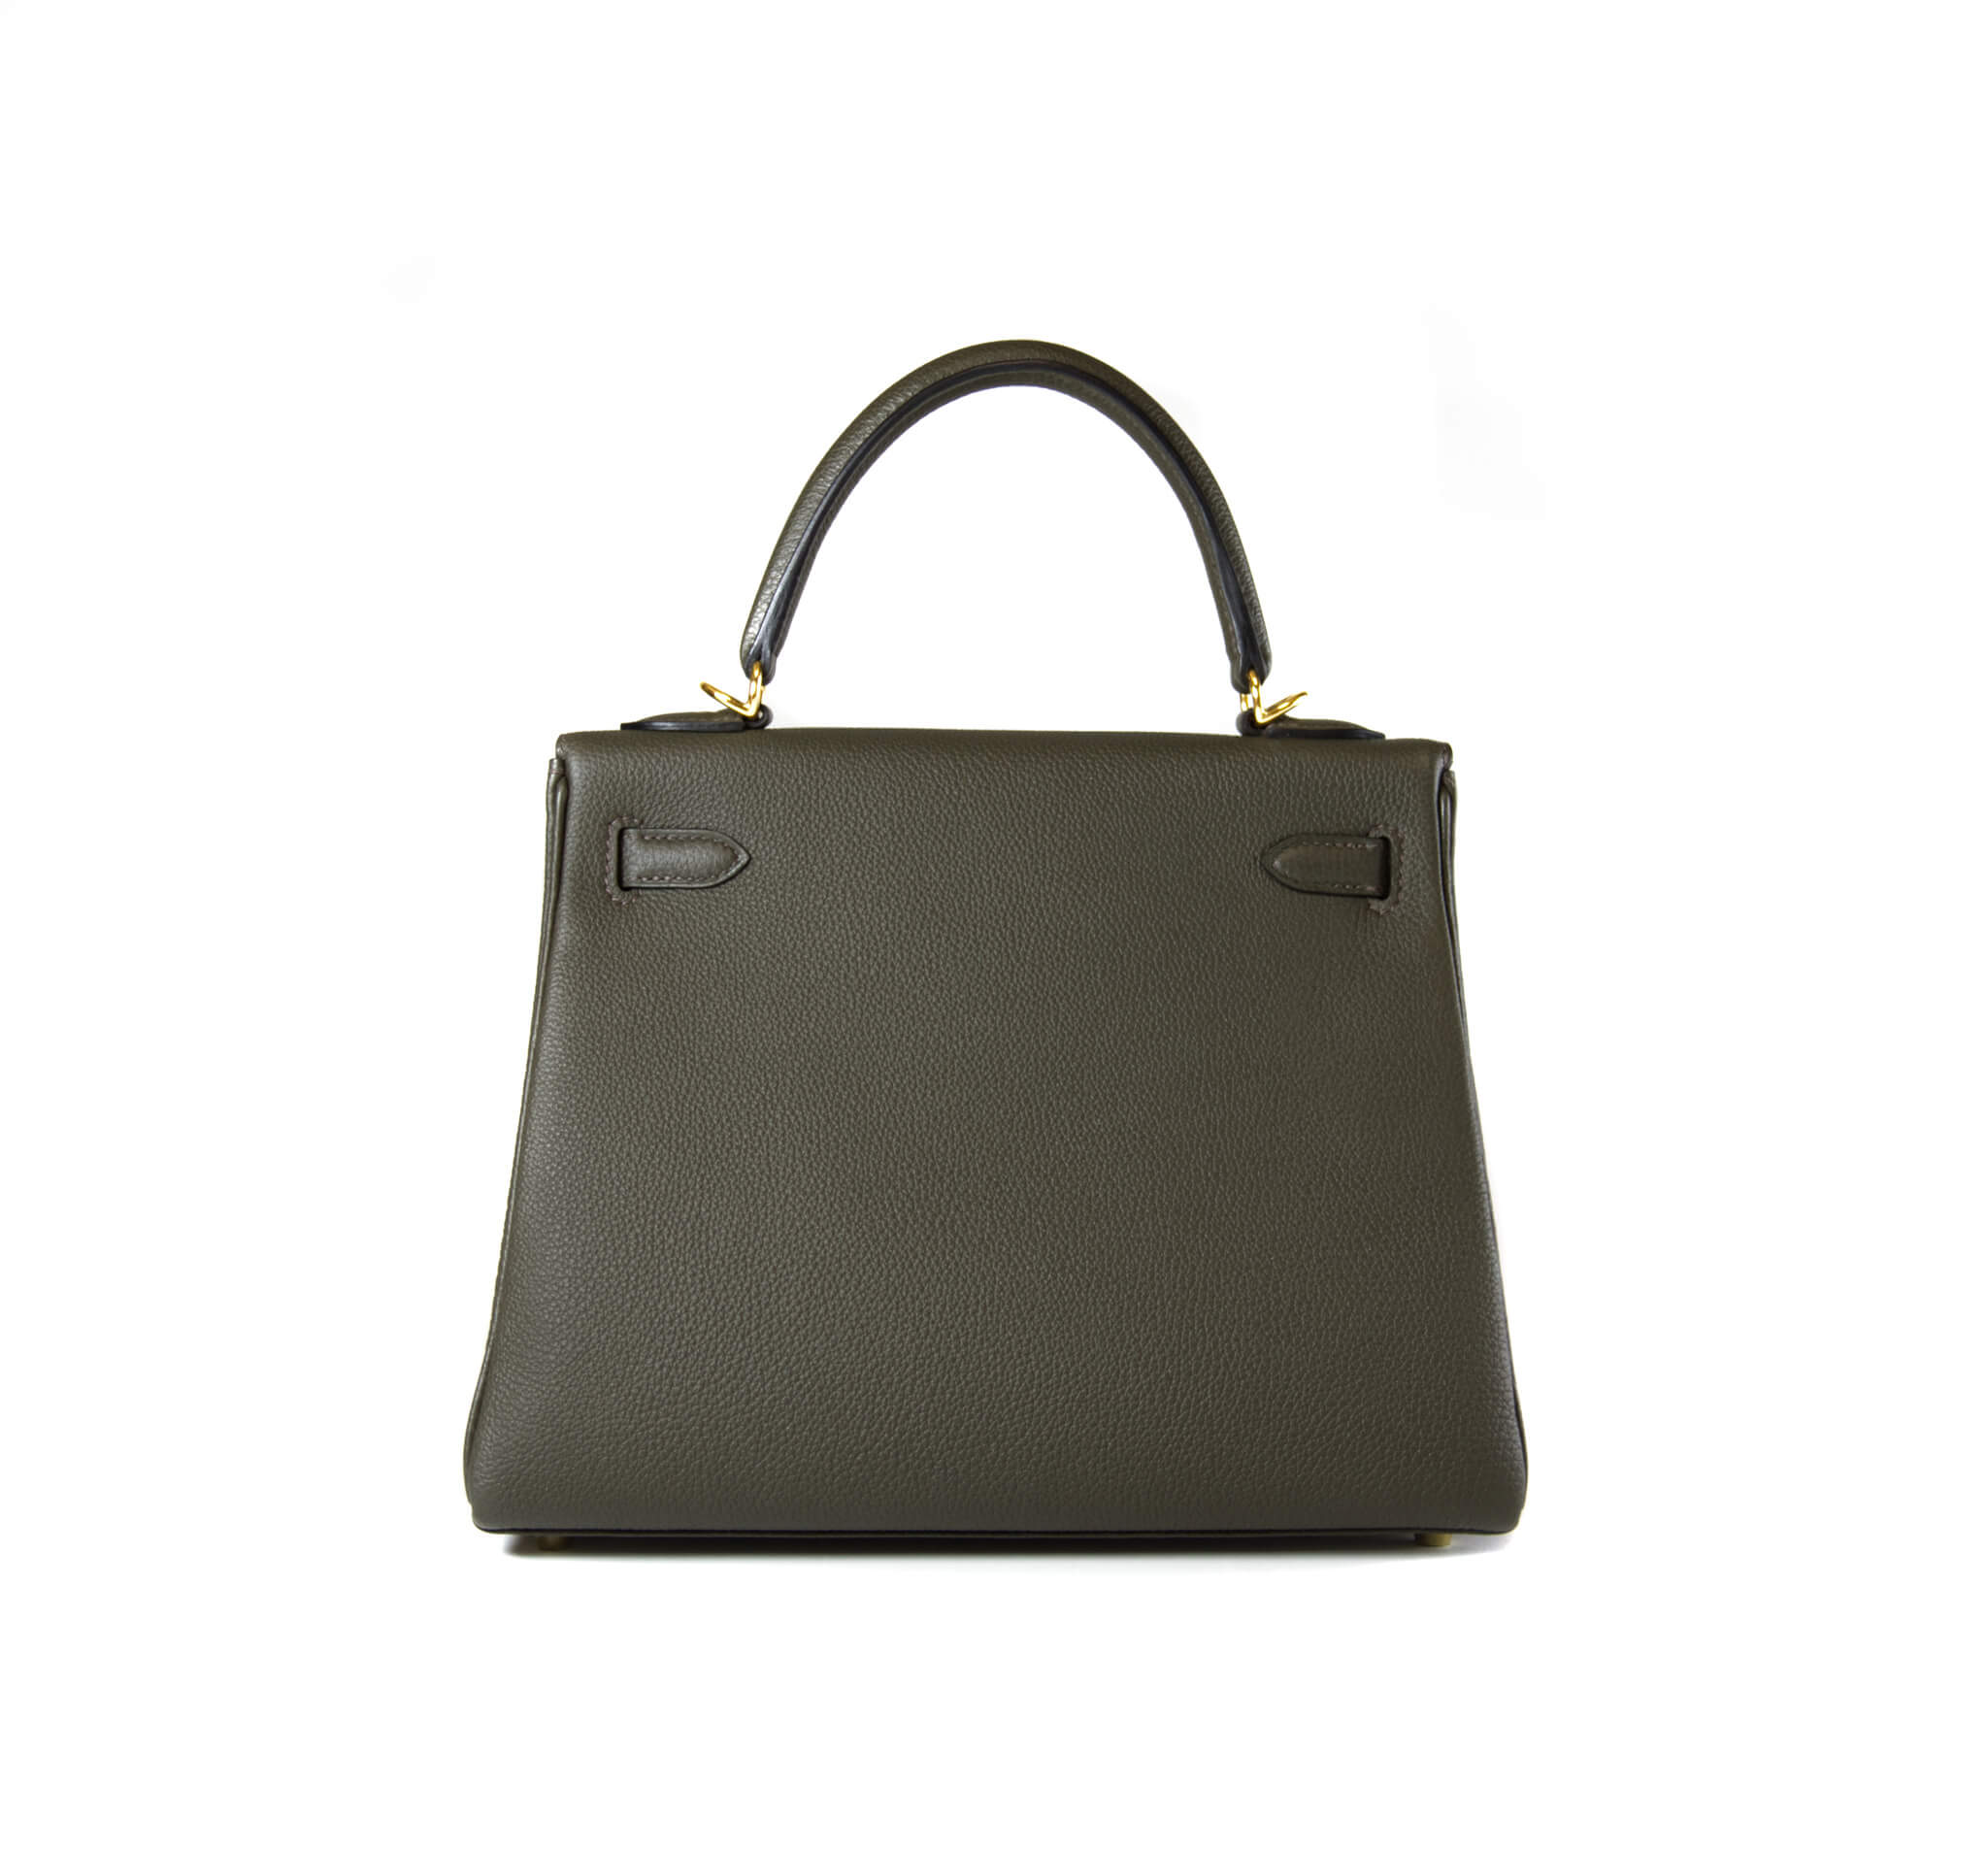 Hermès Kelly 25 cm Handbag in Vert de Gris Togo Leather